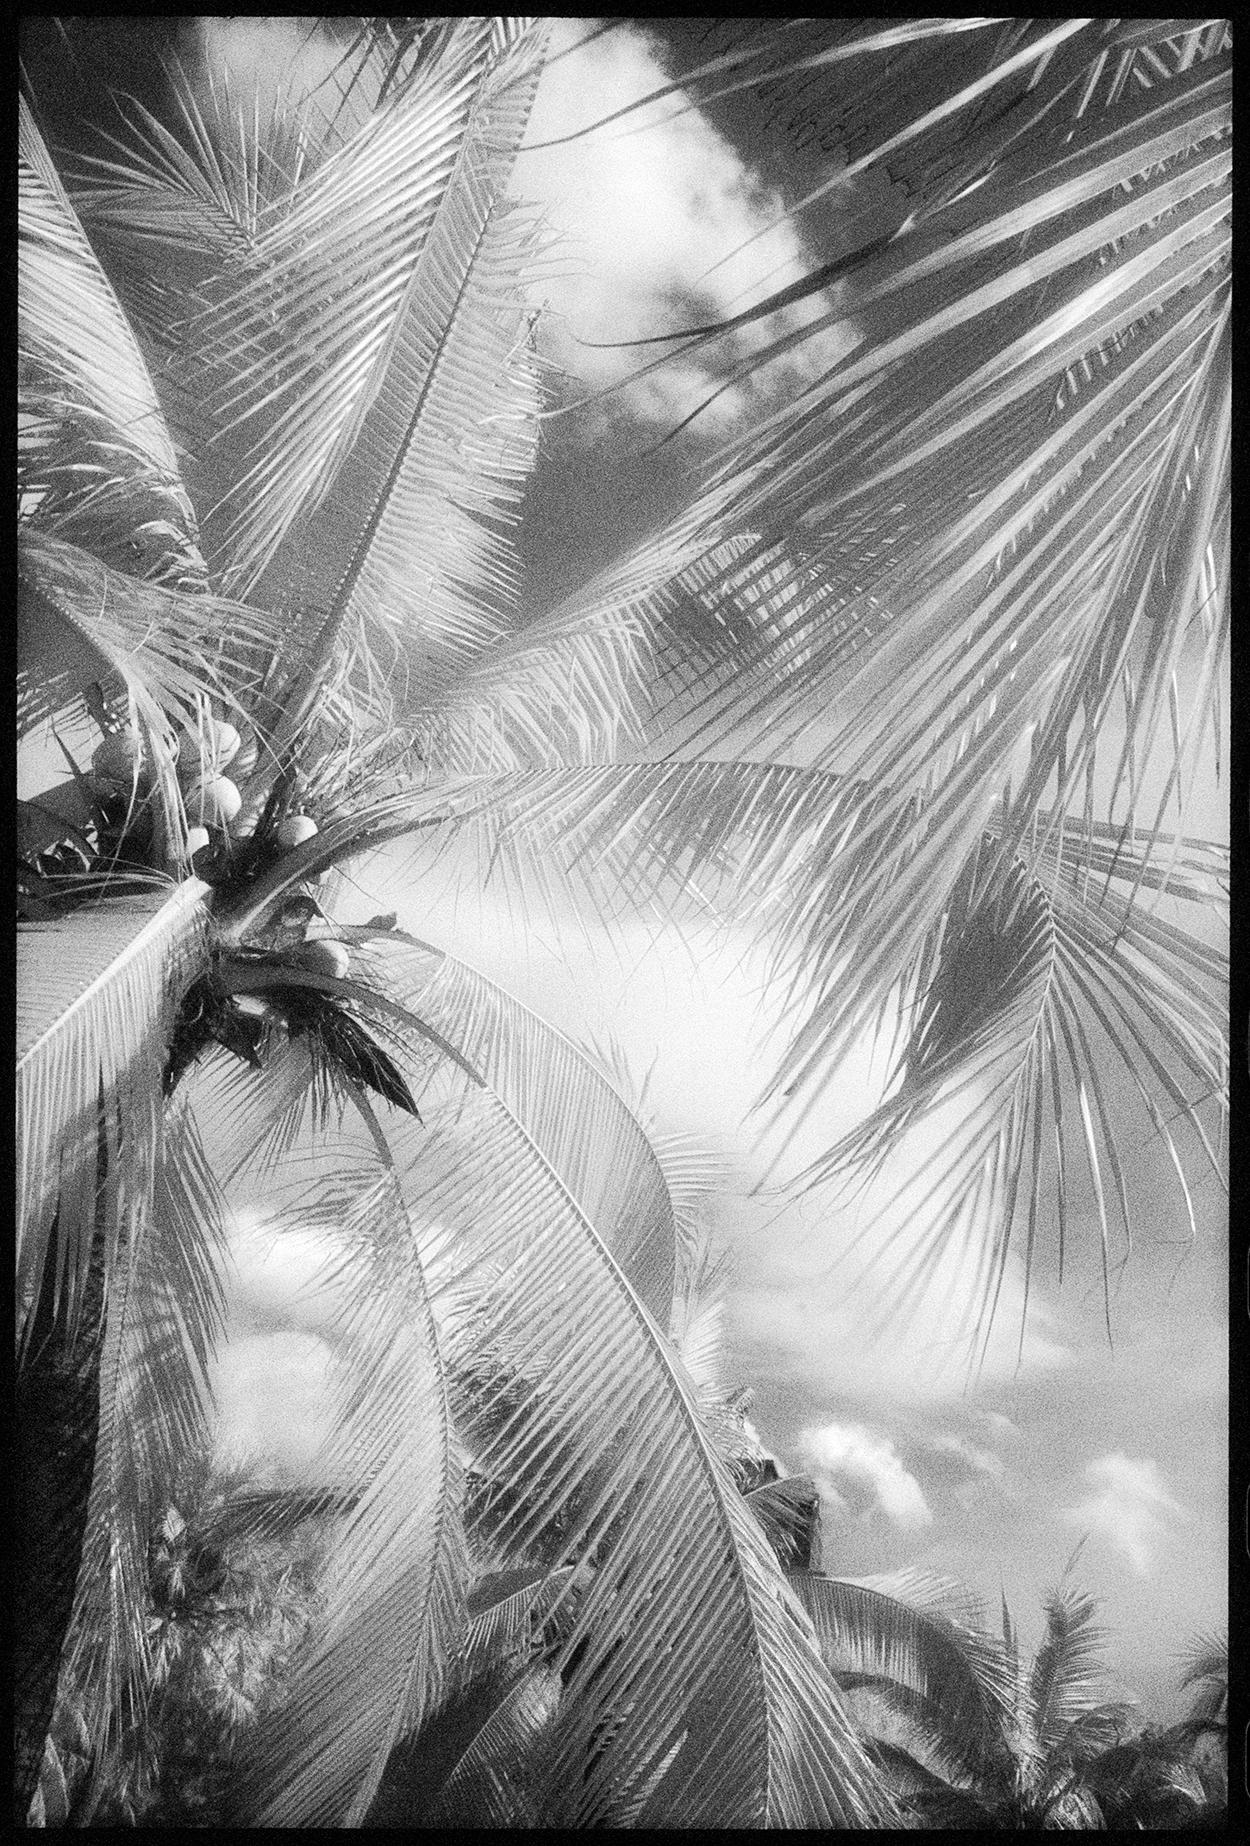 Edward Alfano Black and White Photograph – Lumphini Park - Infrared Photograph on Double Sided Aluminum